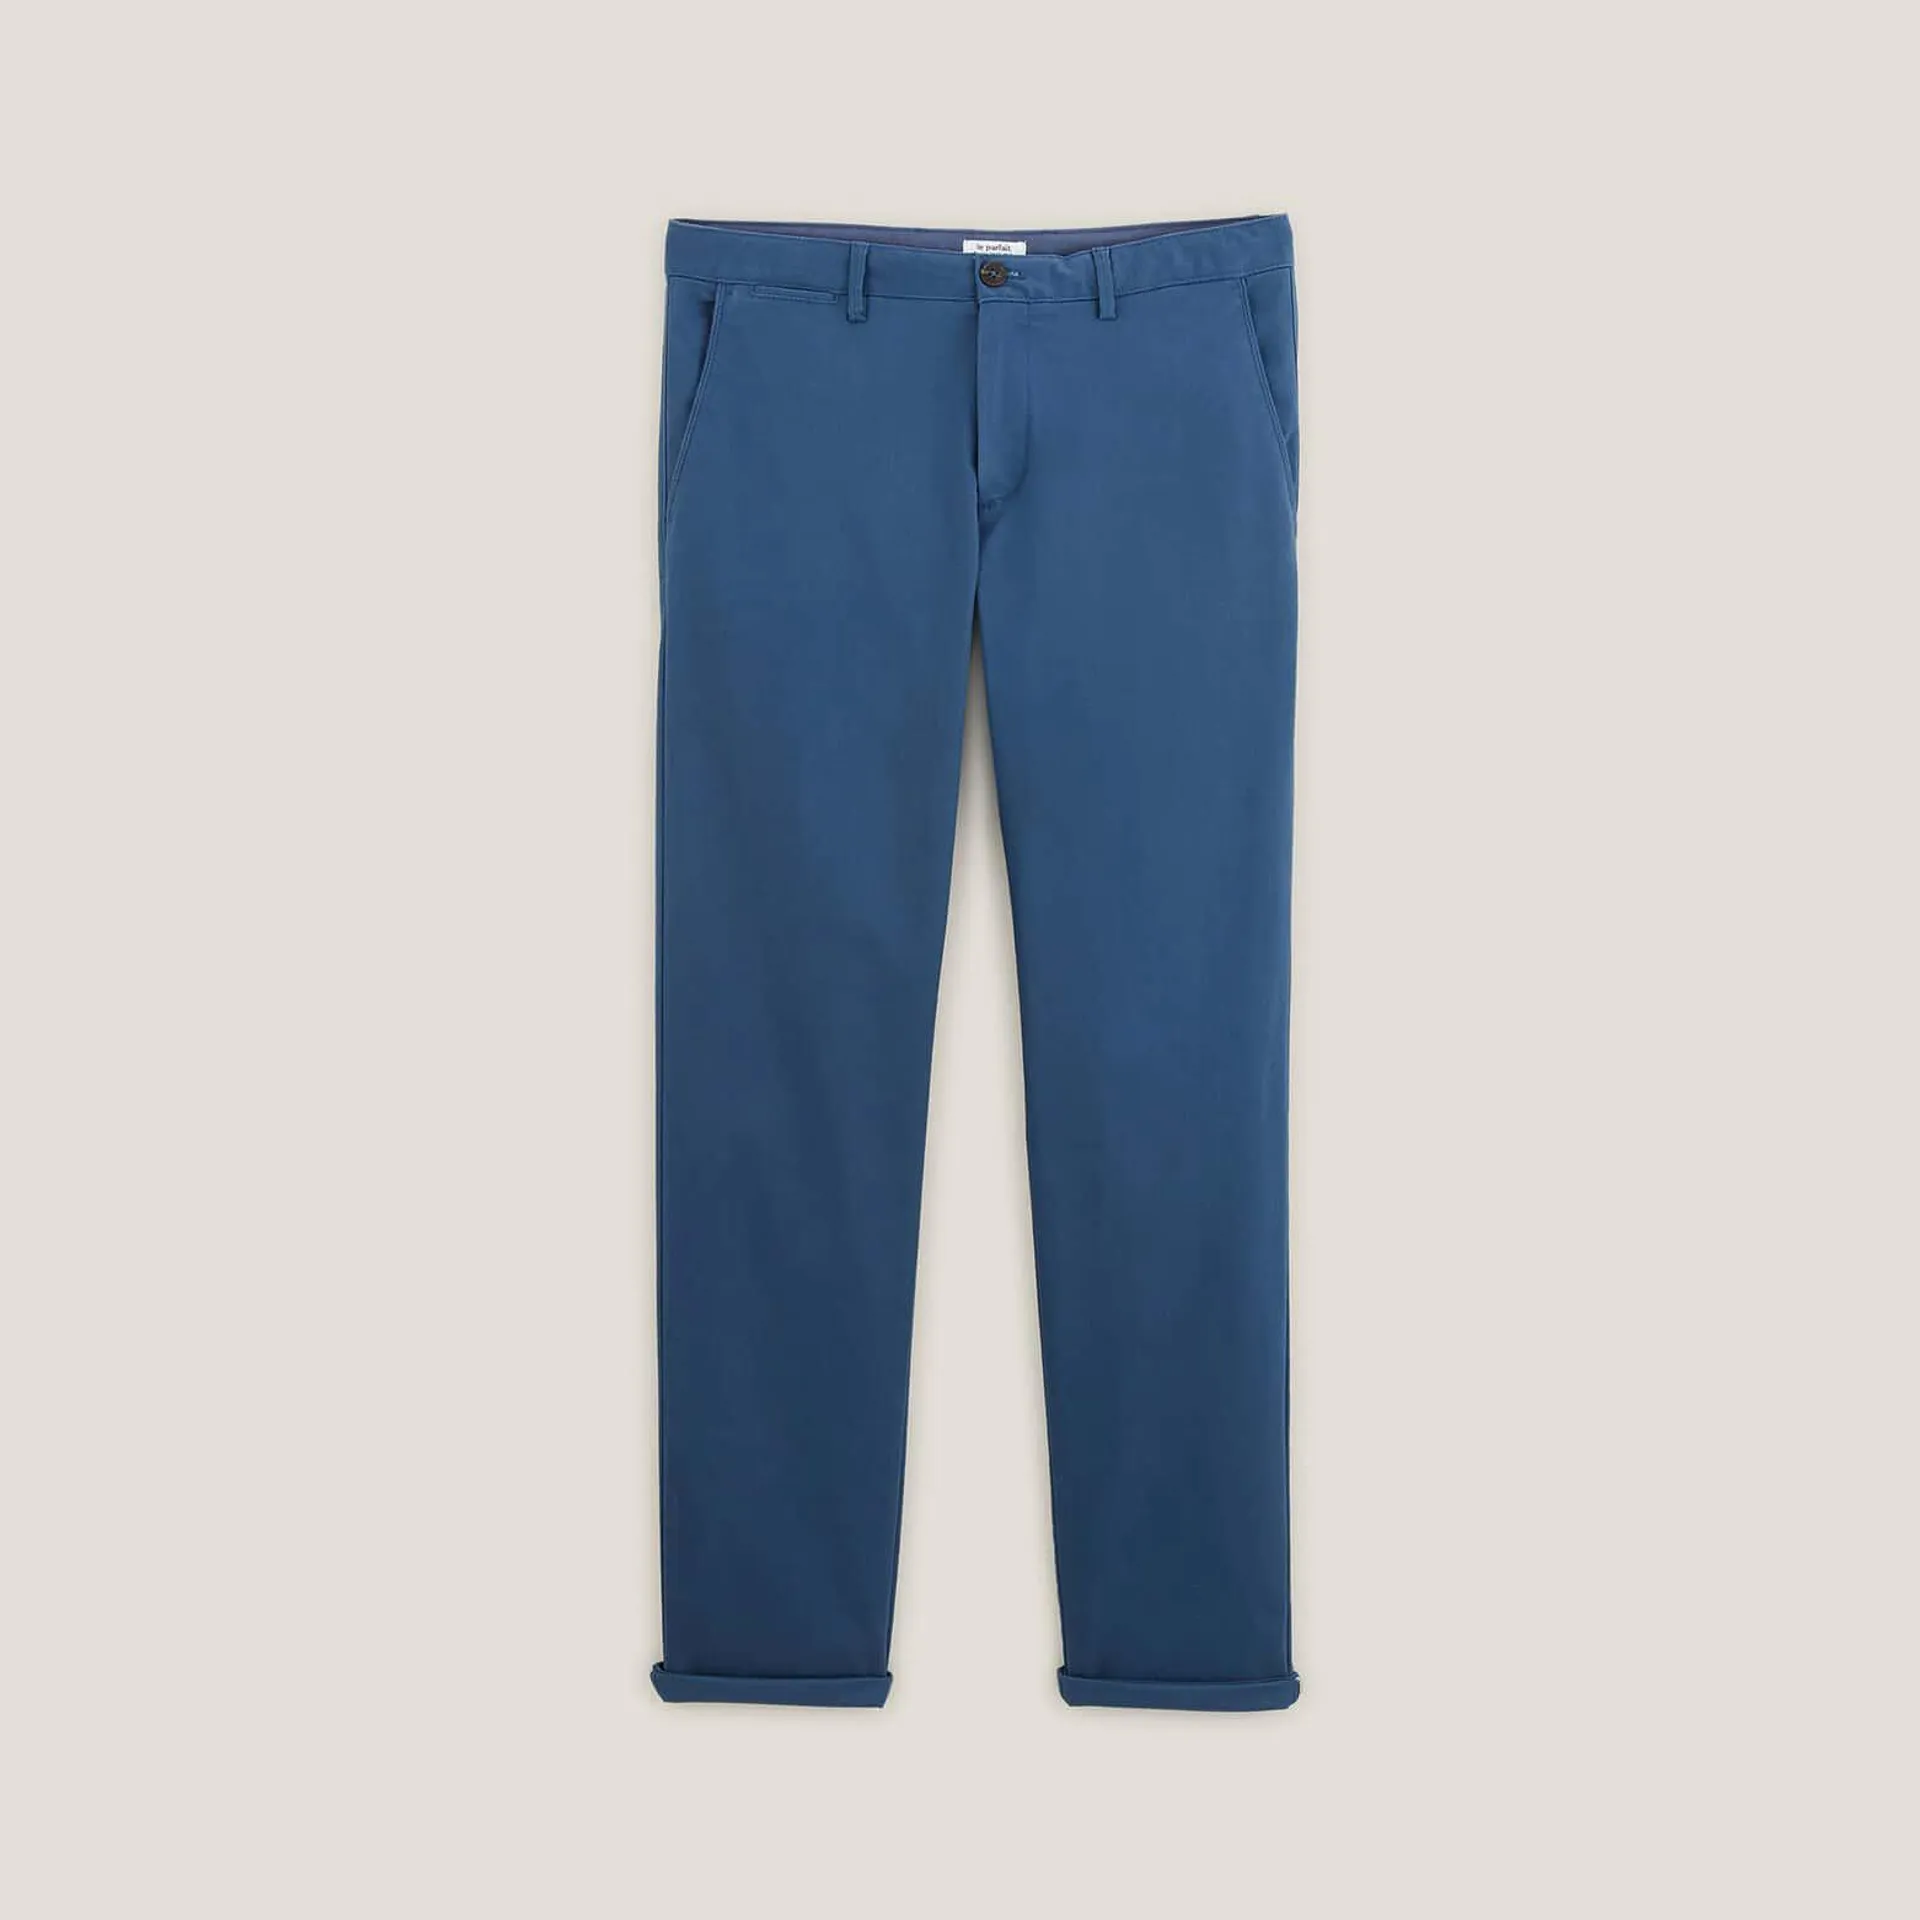 Pantalon chino regular "le parfait by JULES" - bleu